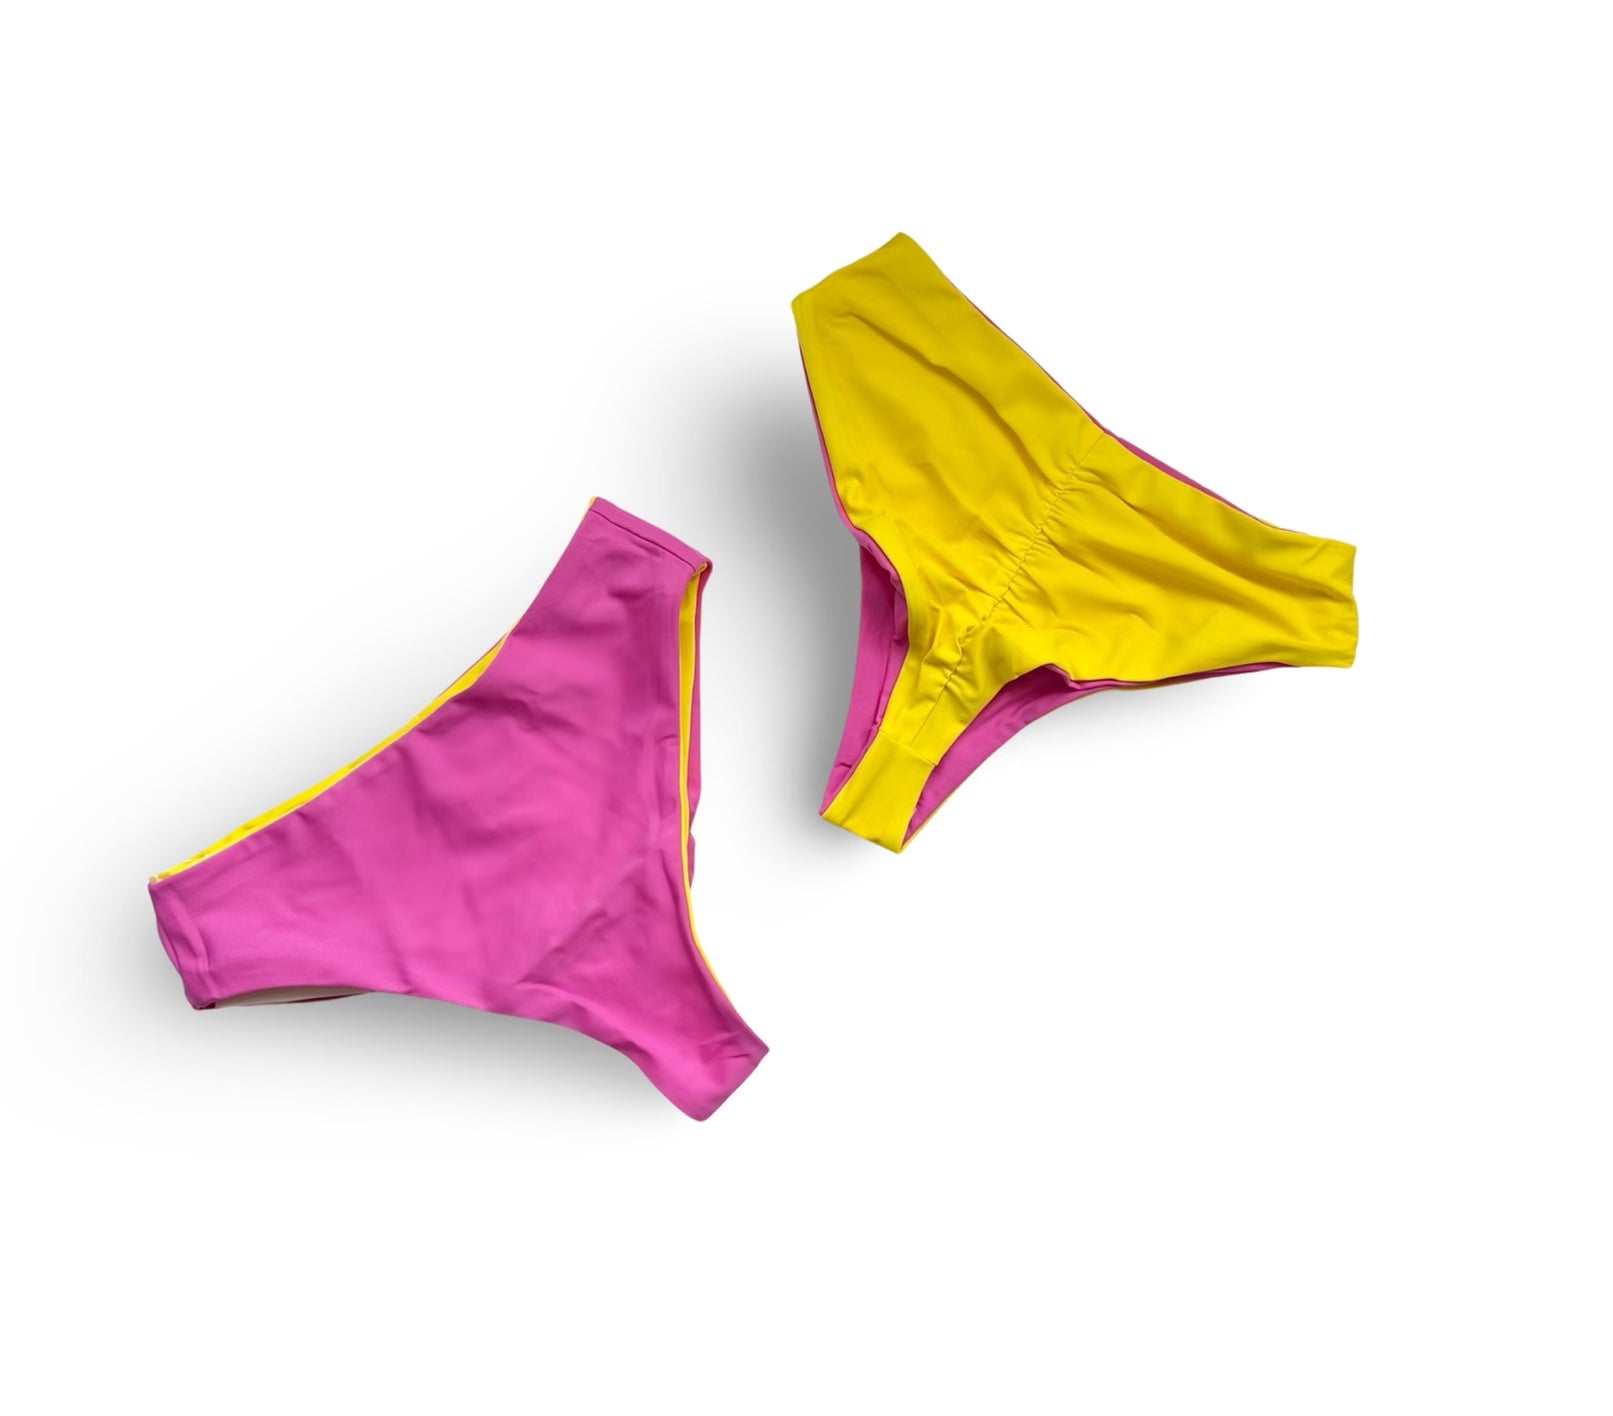 Reversible High waist cheeky bikini bottoms by Bikini Flavors shown in Strawberry Sunrise.  Pink reverses to yellow.  American Made. 